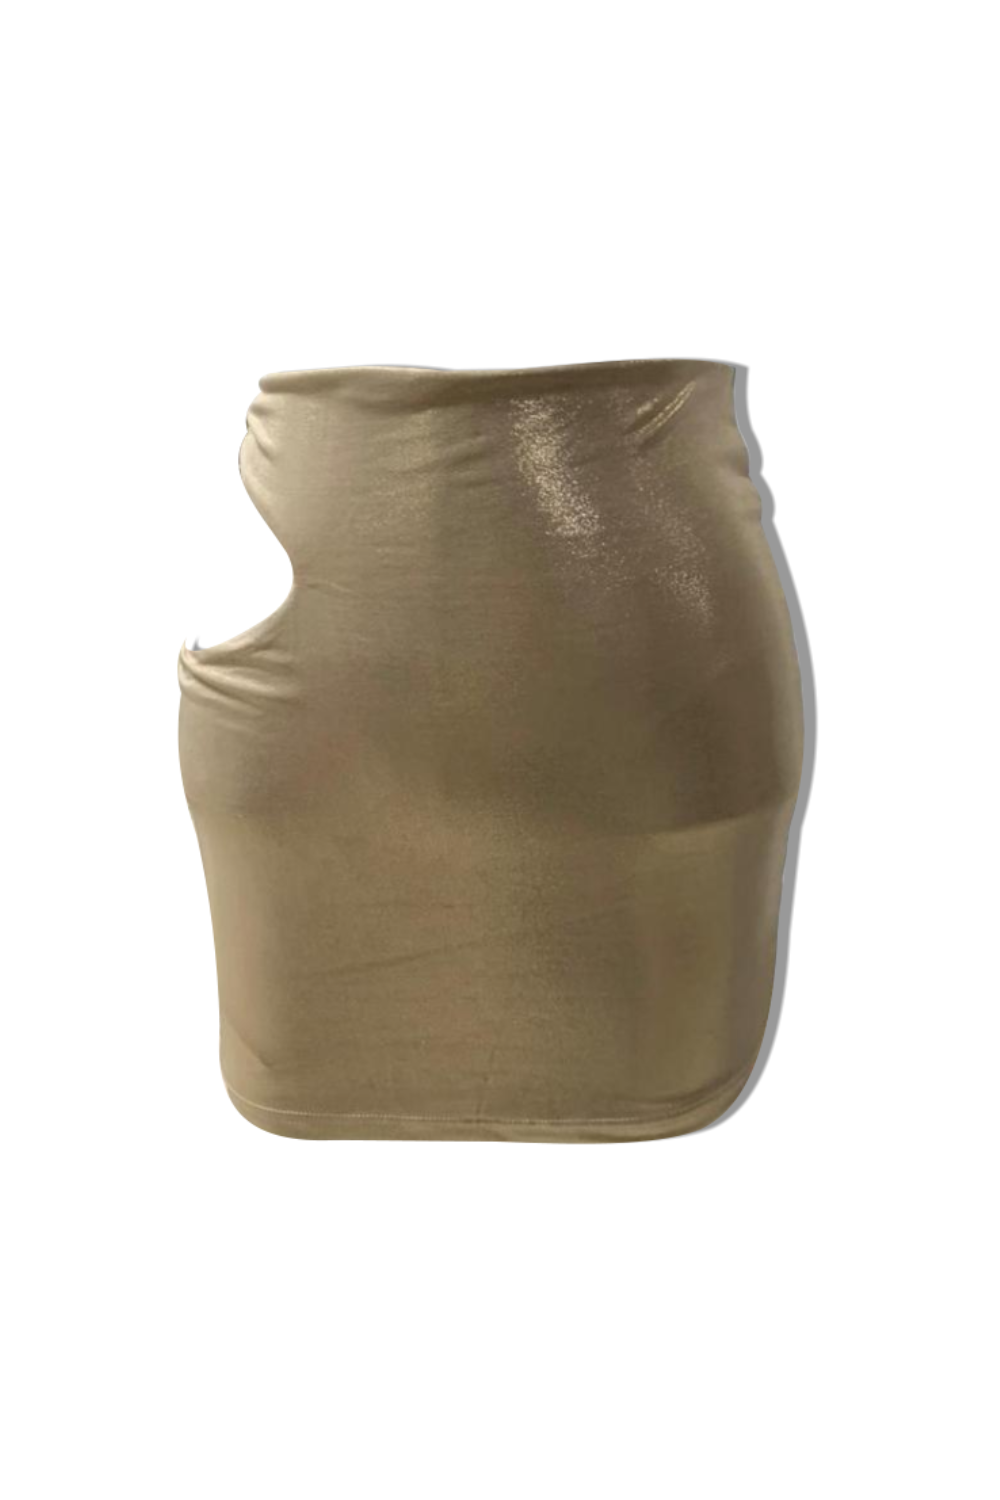 Bronze Skirt